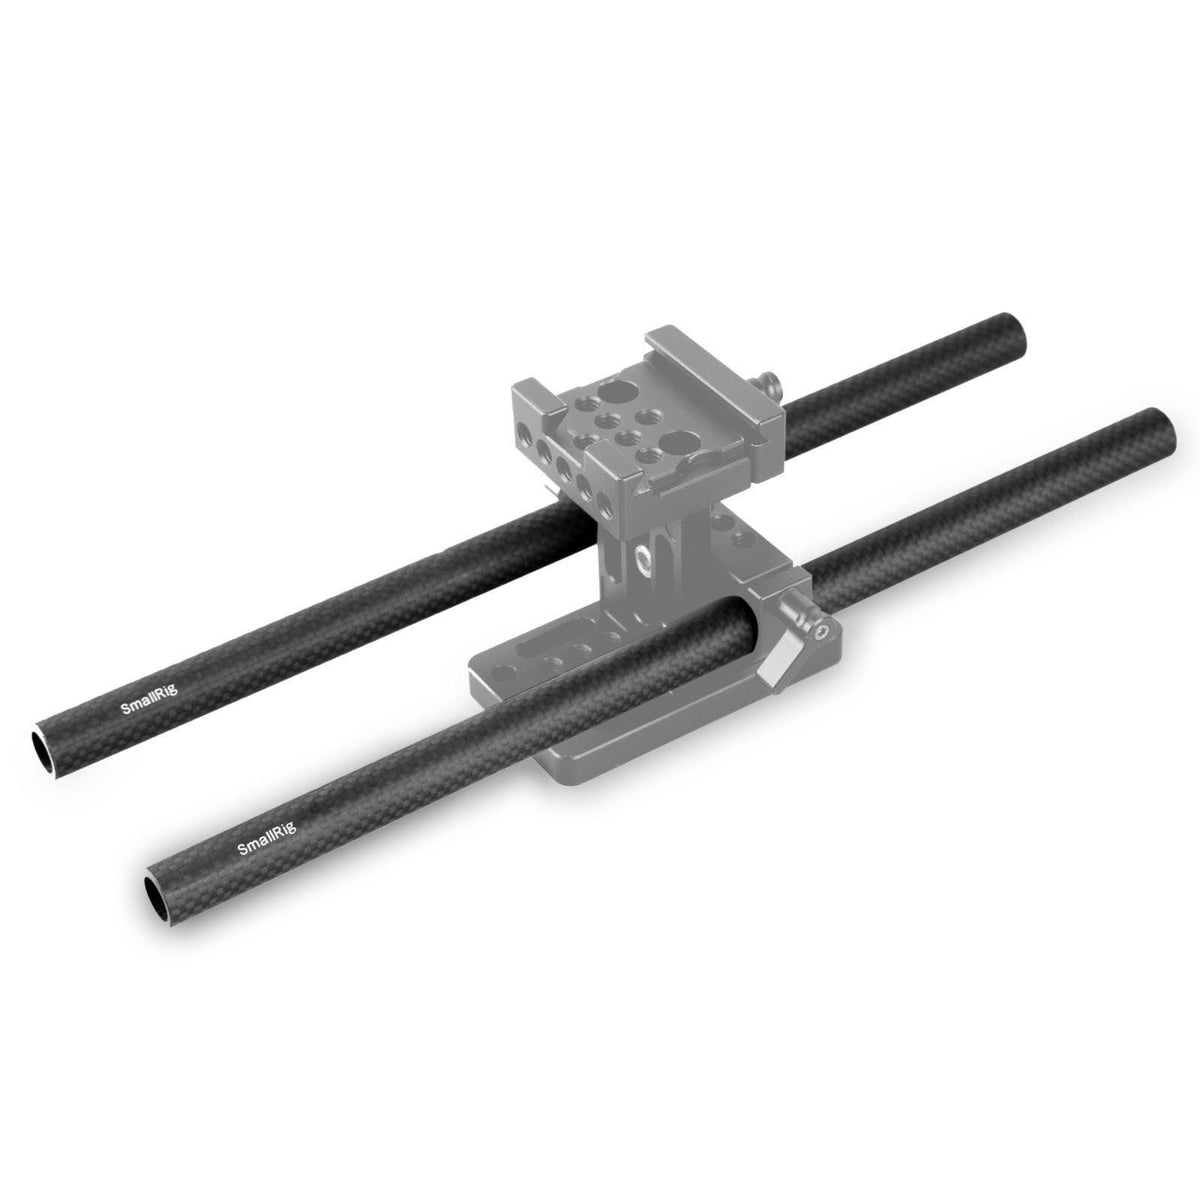 SmallRig 15mm Carbon Fiber Rod - 30cm 12 inch (2pcs) 851 - Cinegear Middle-East S.A.L